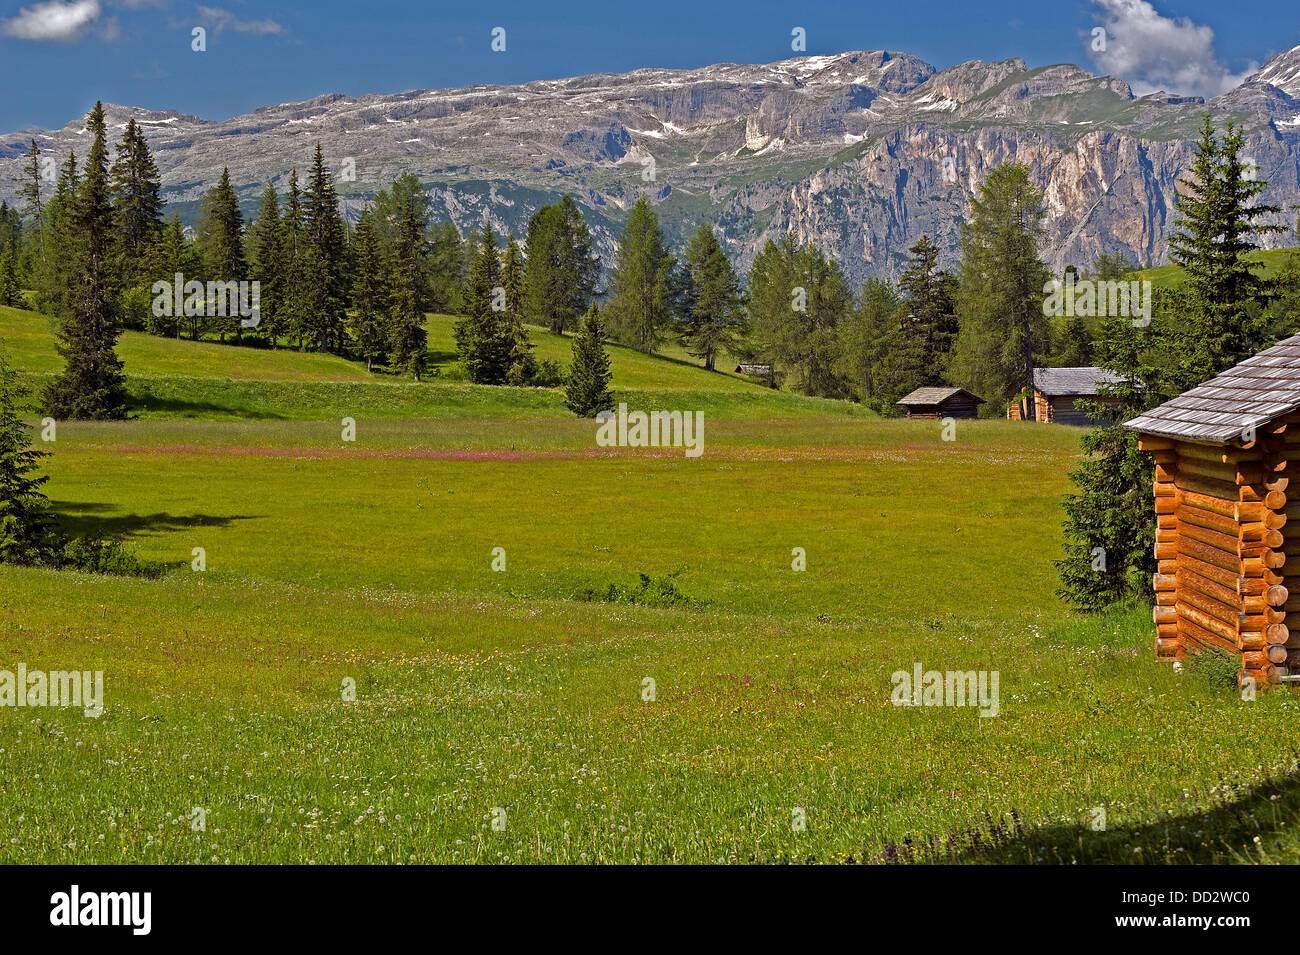 Gruppo Gardenaccia, Dolomiti bolzano, Italia Foto Stock